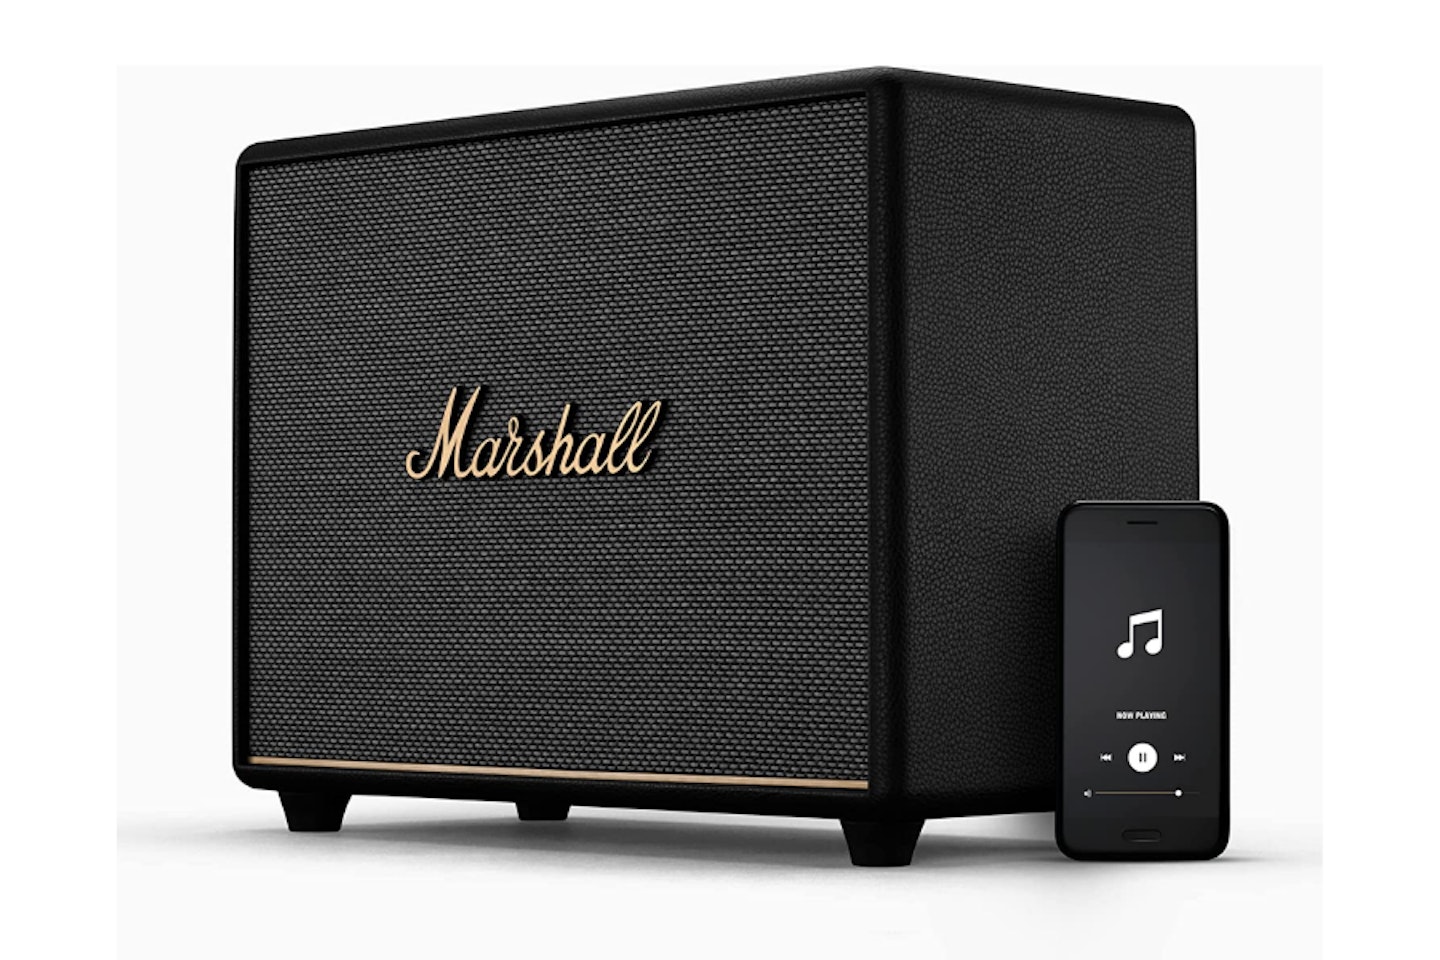 Marshall Woburn III Bluetooth Speaker - one of the best speakers for music